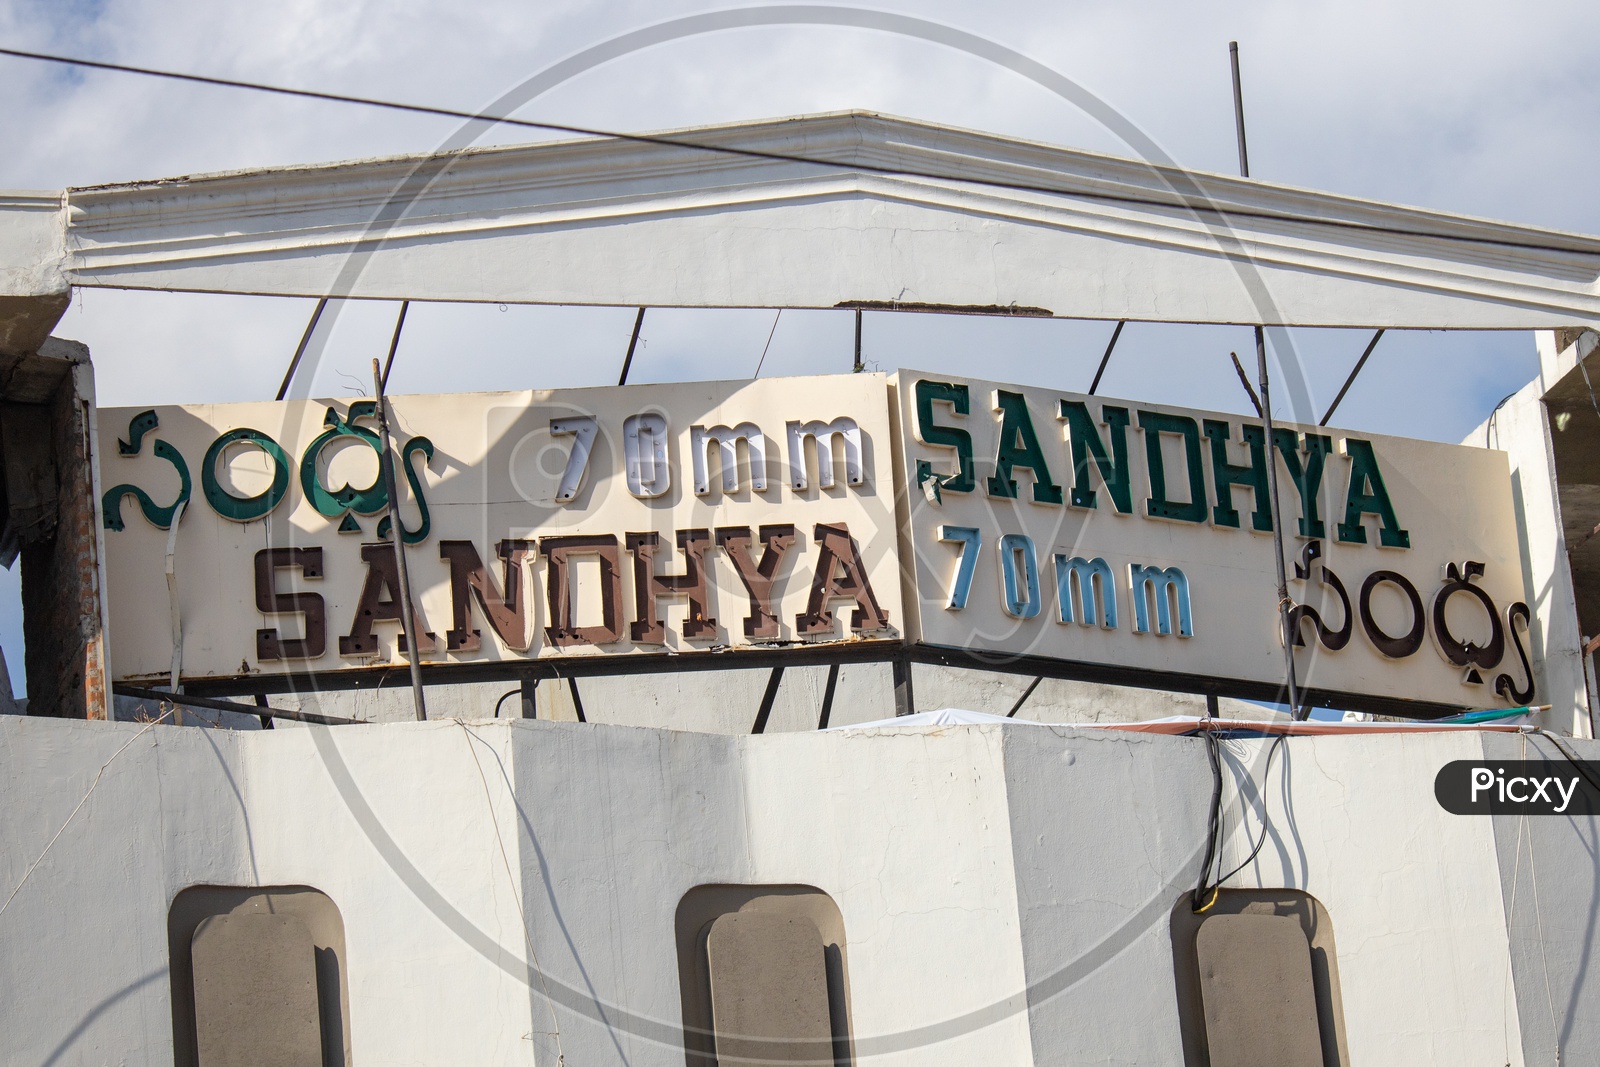 Sandhya 70mm Movie Theater